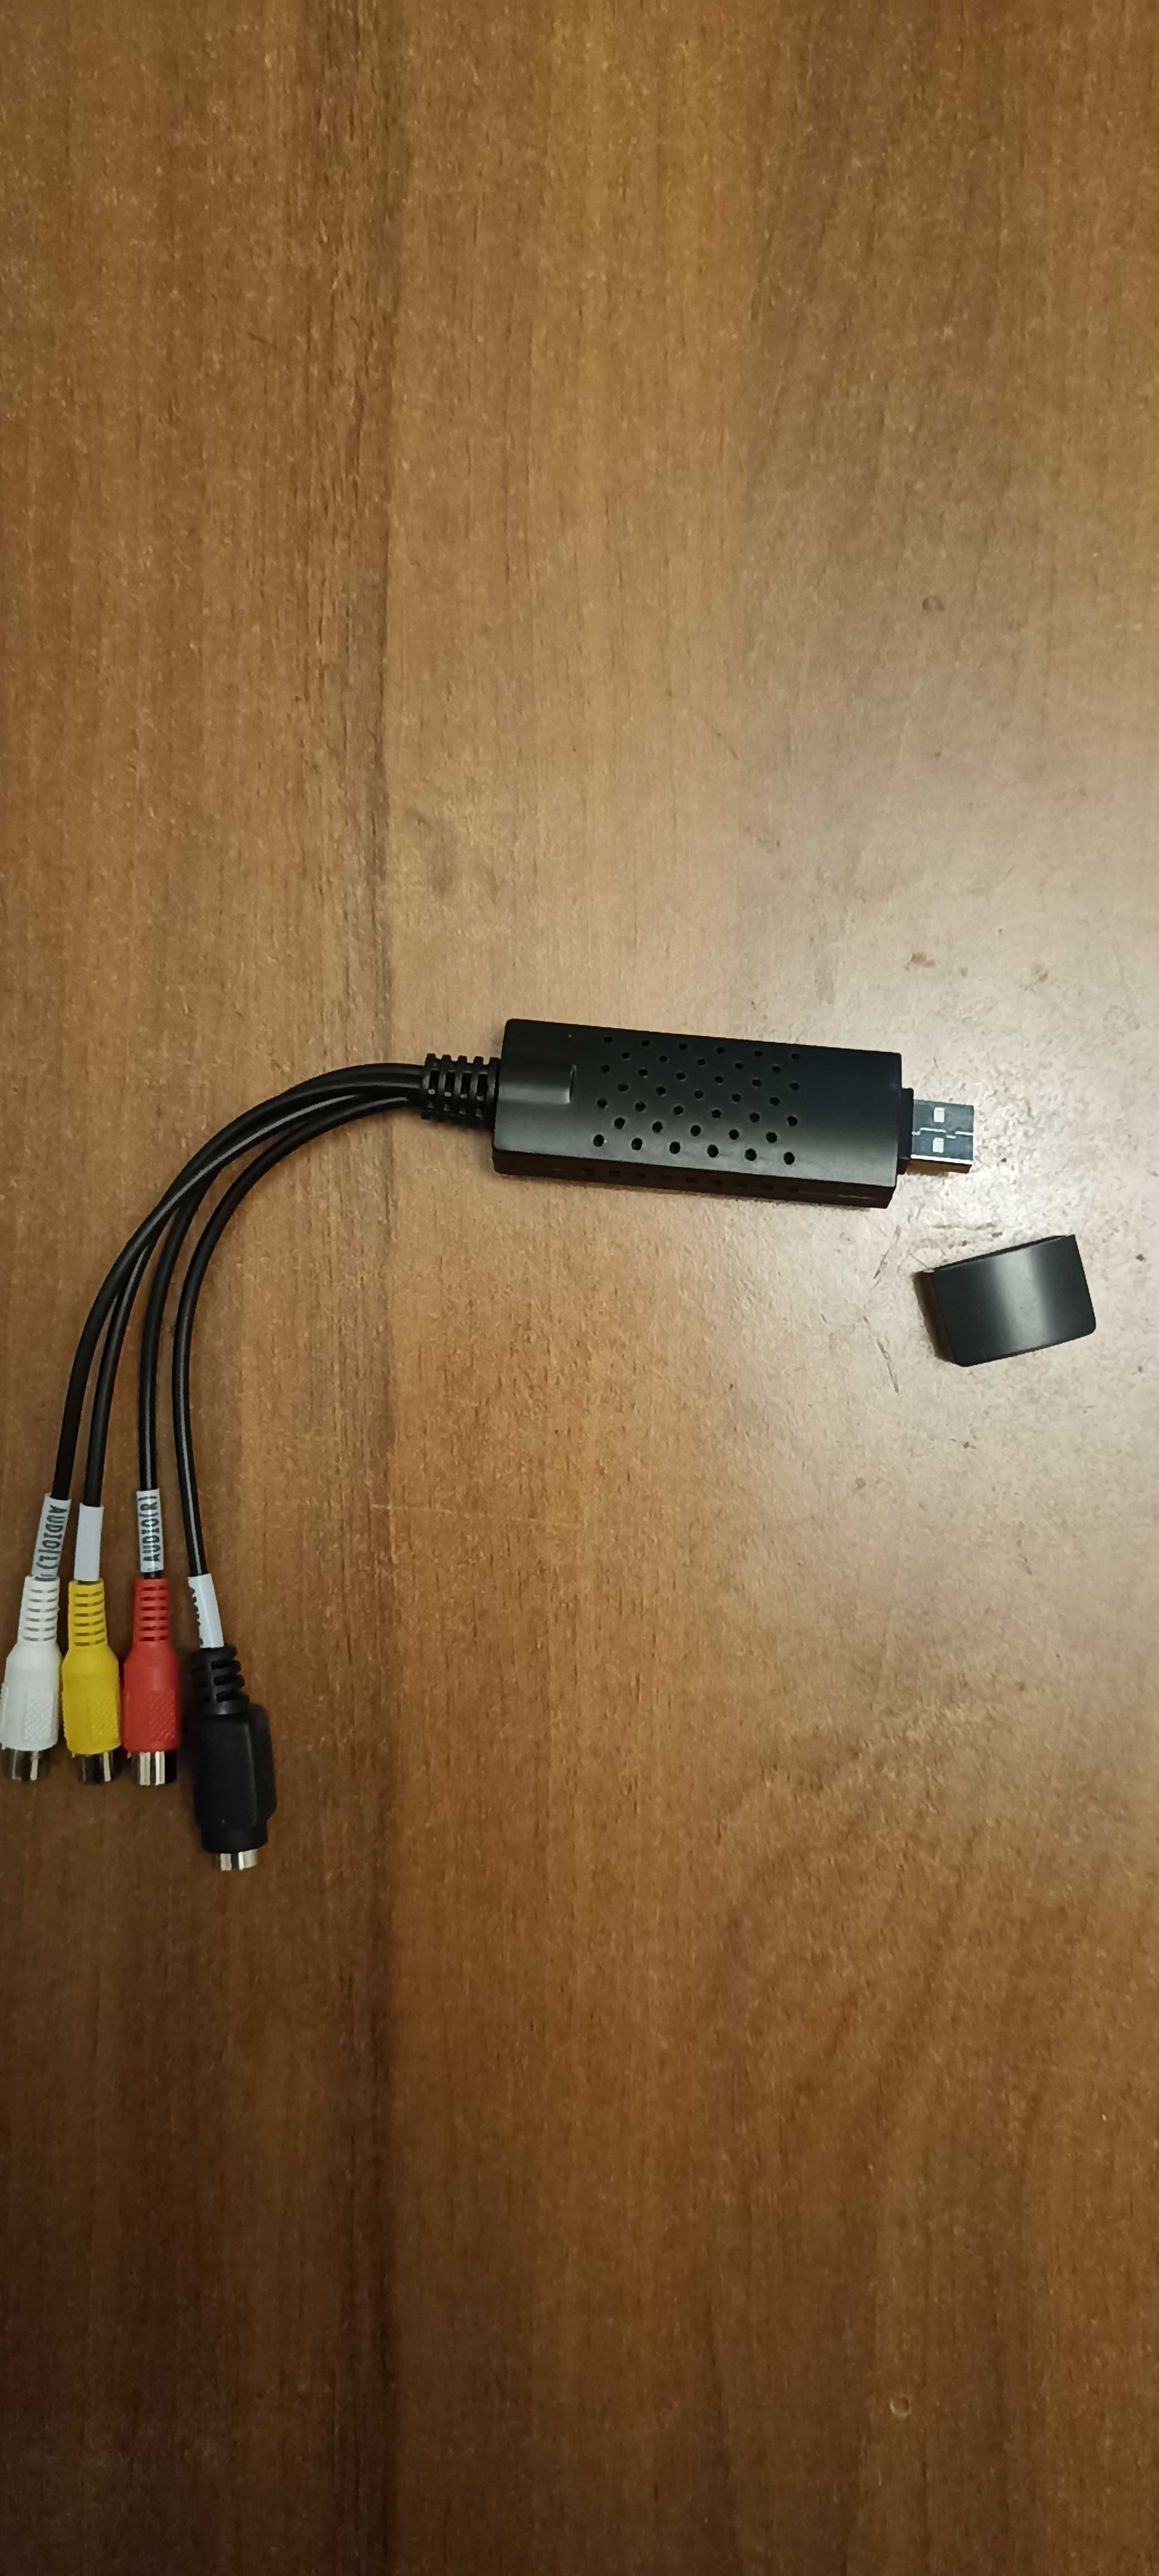 Видео адаптер USB 2.0. Оцифровка кассет VHS. Easy cap